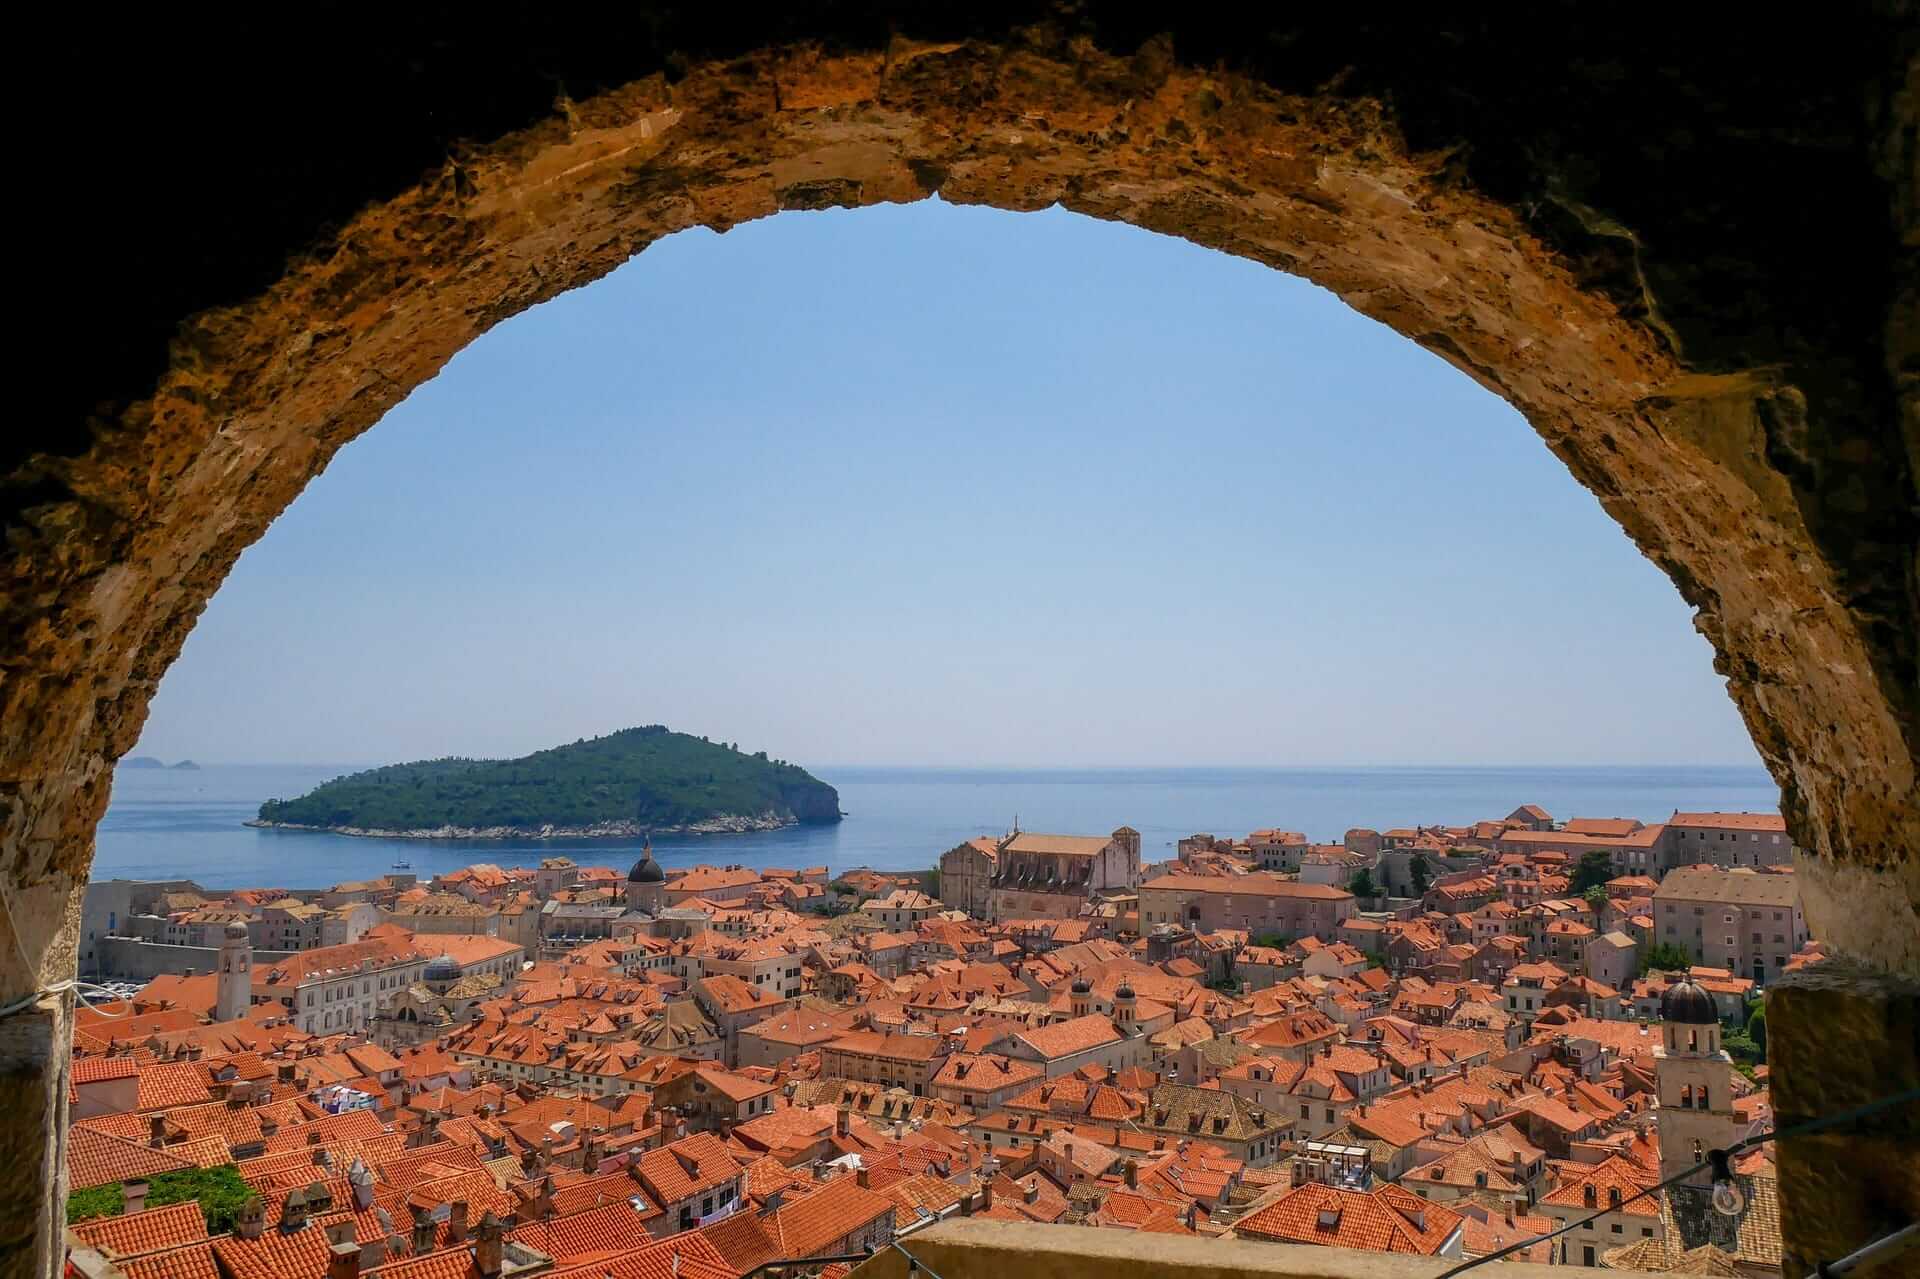 Game of Thrones Locations - Dubrovnik, Croatia